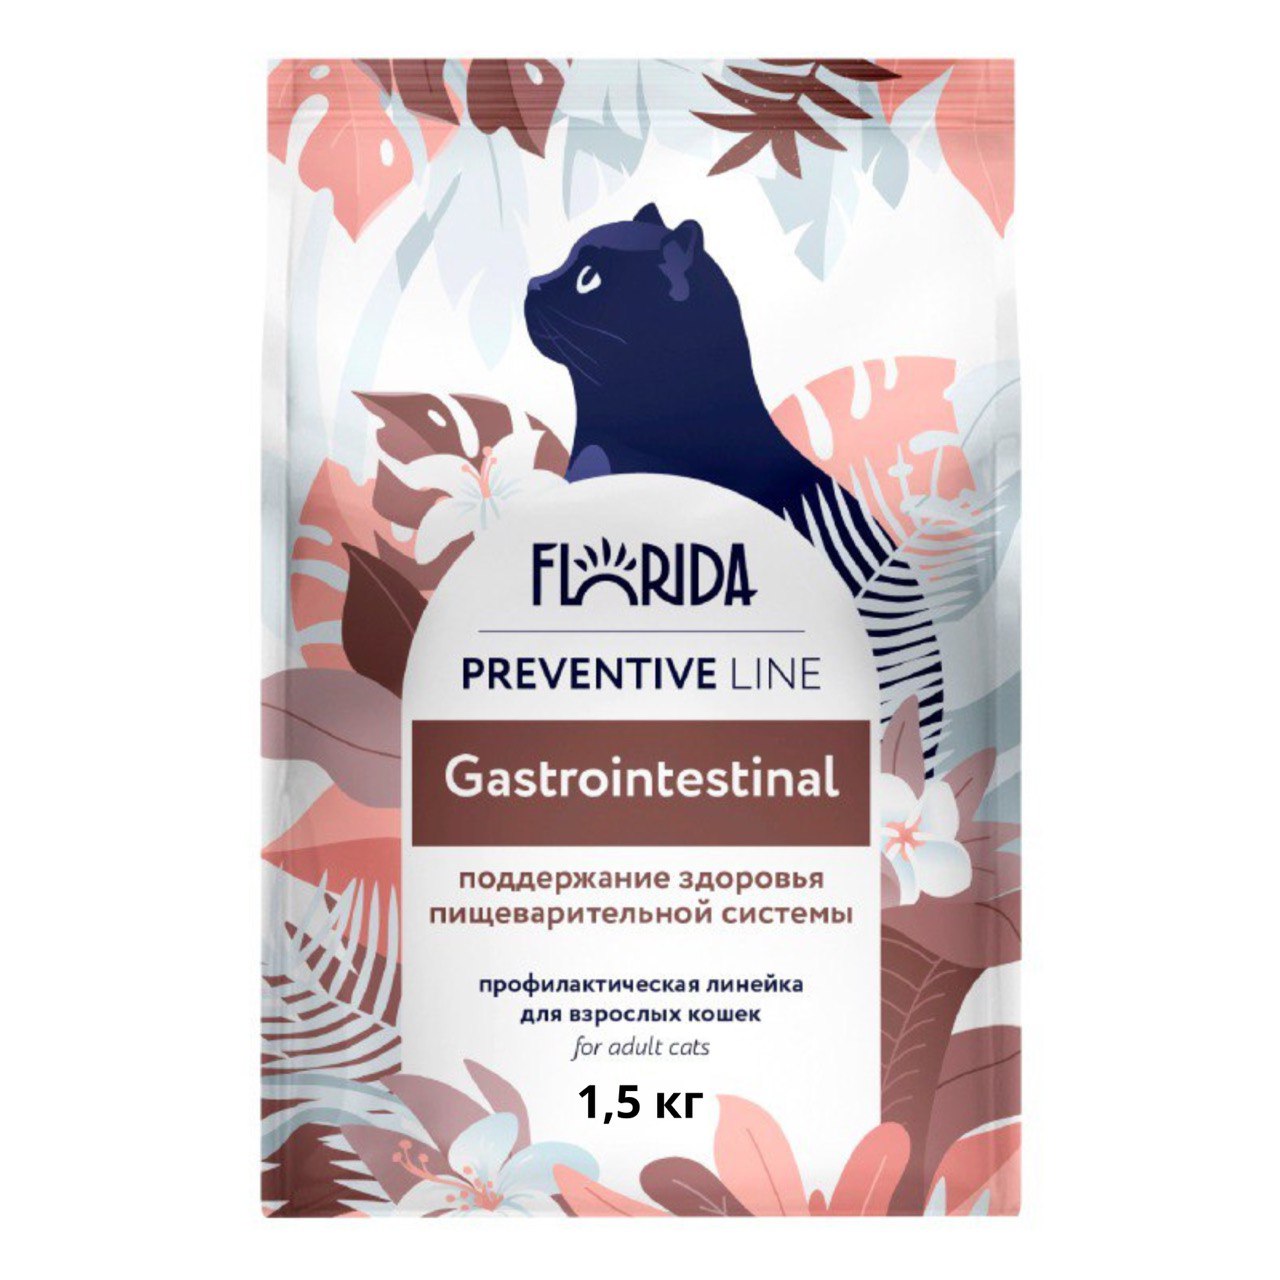 Florida Preventive Line Gastrointestinal д/кош 1,5 кг